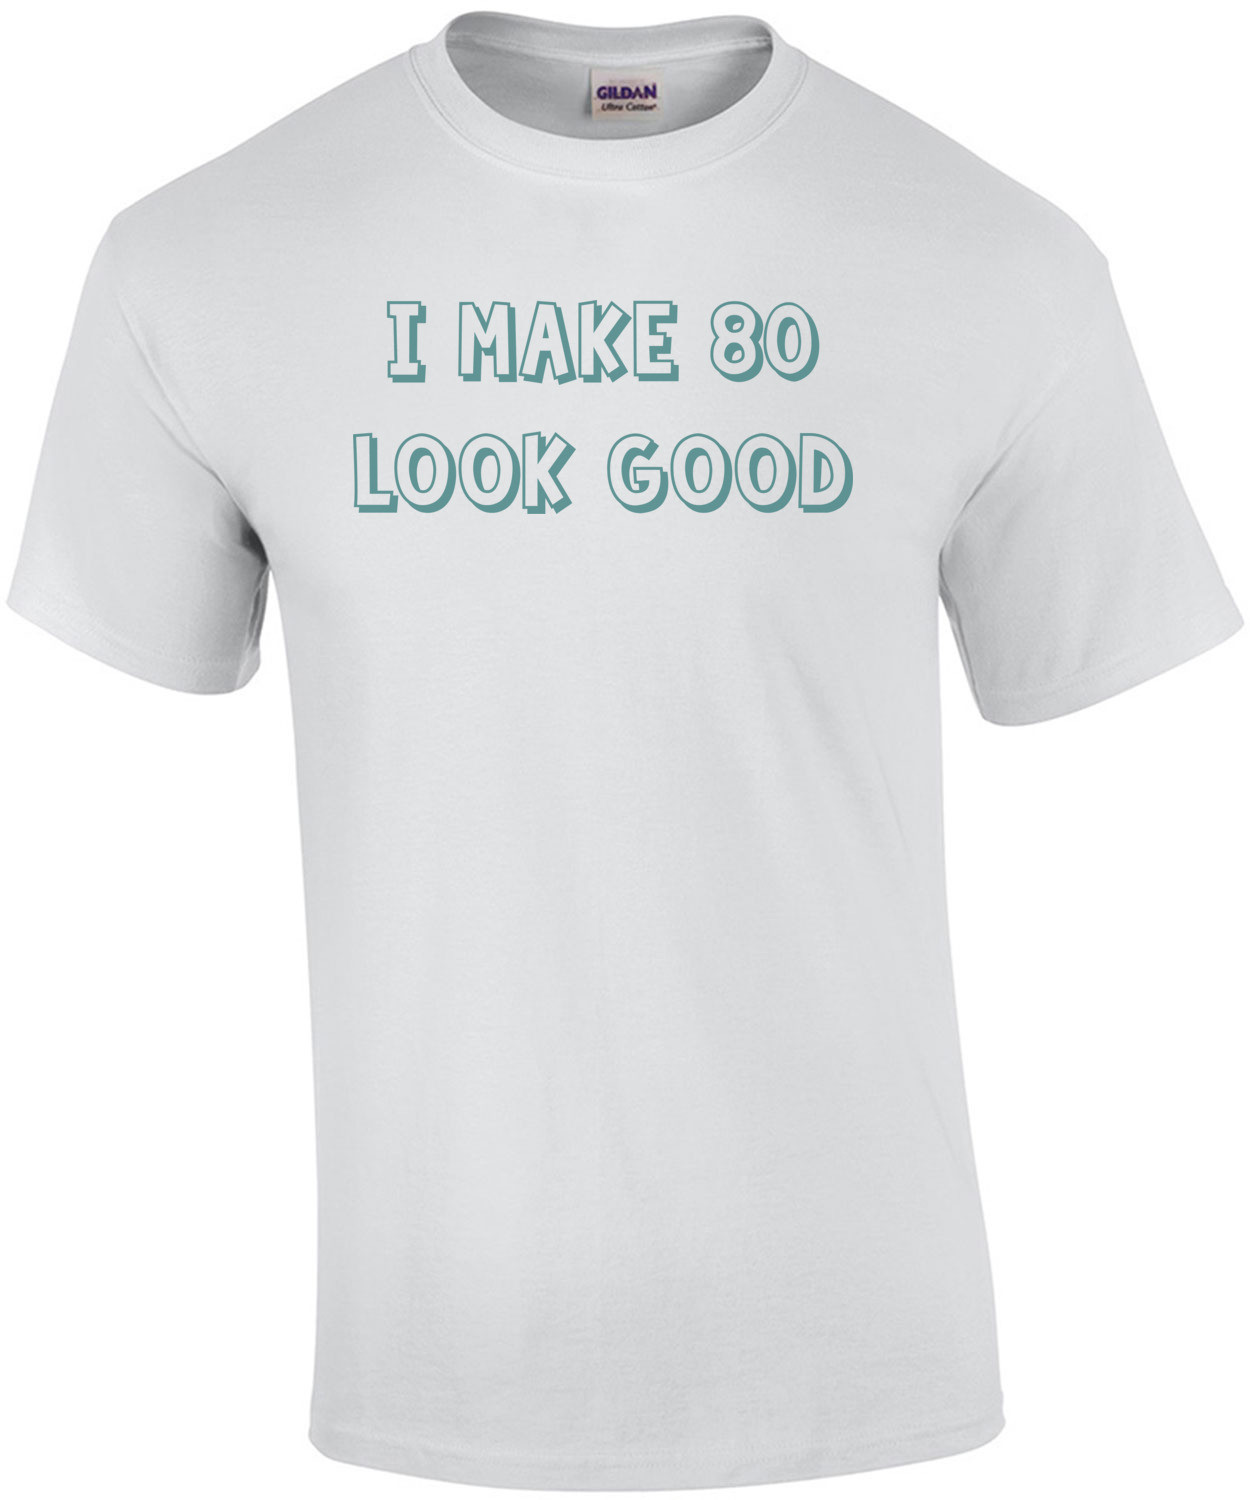 I make 80 look good - eighty 80 birthday t-shirt